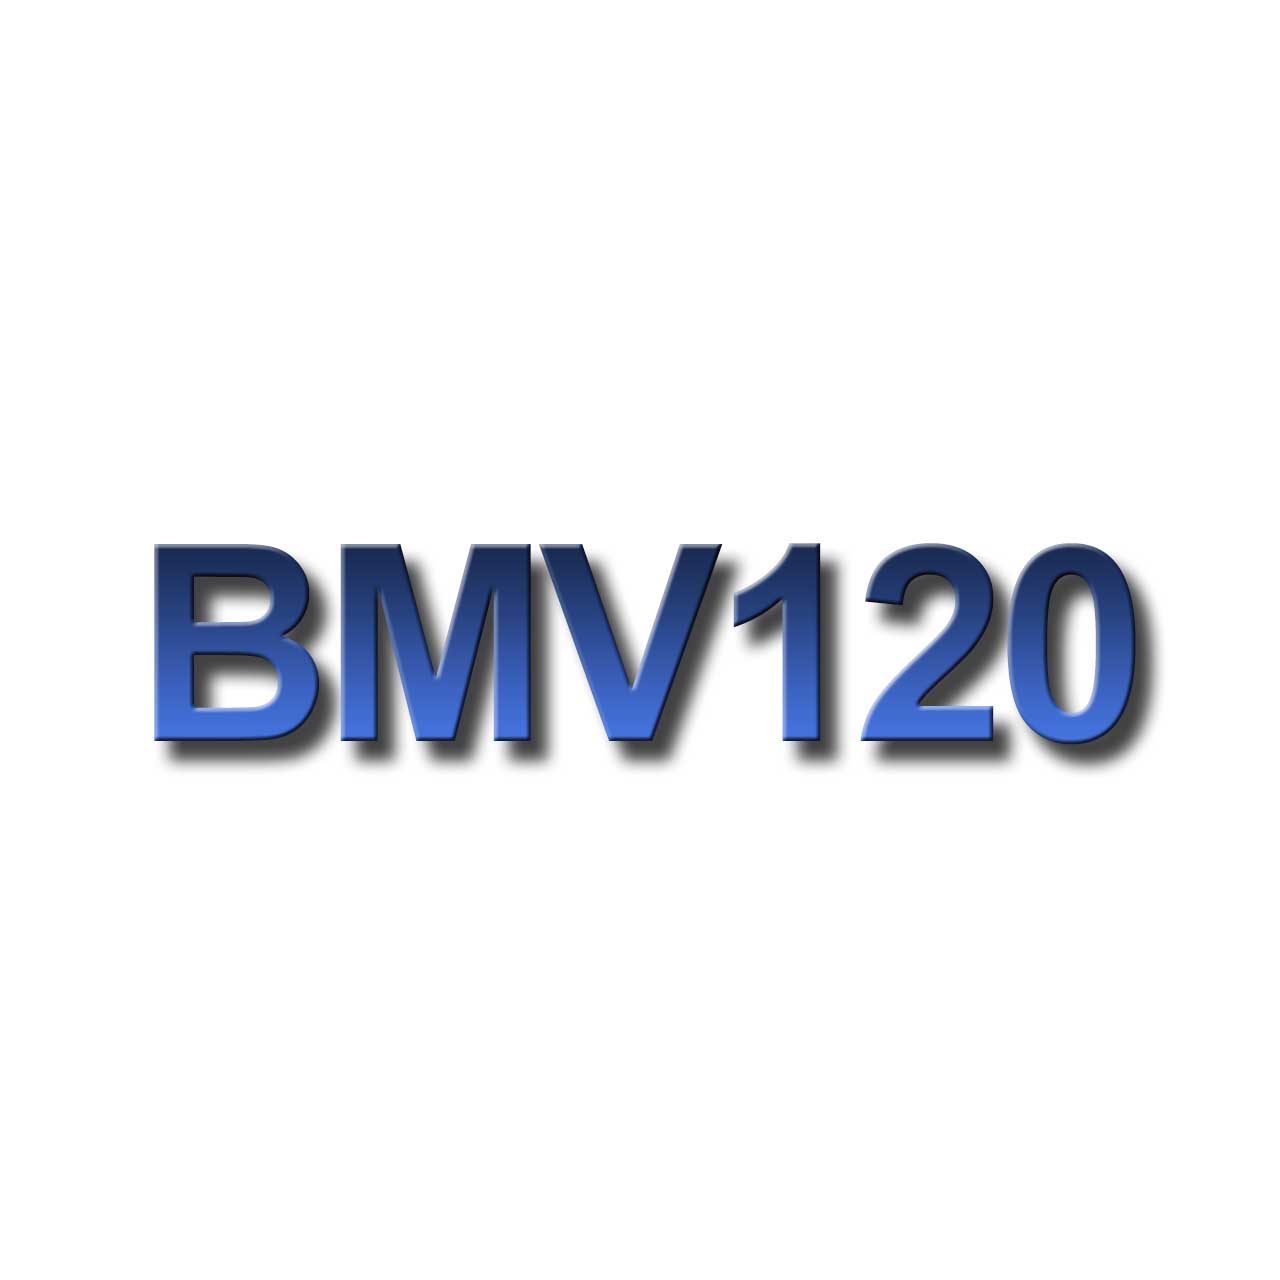 BMV(F)120